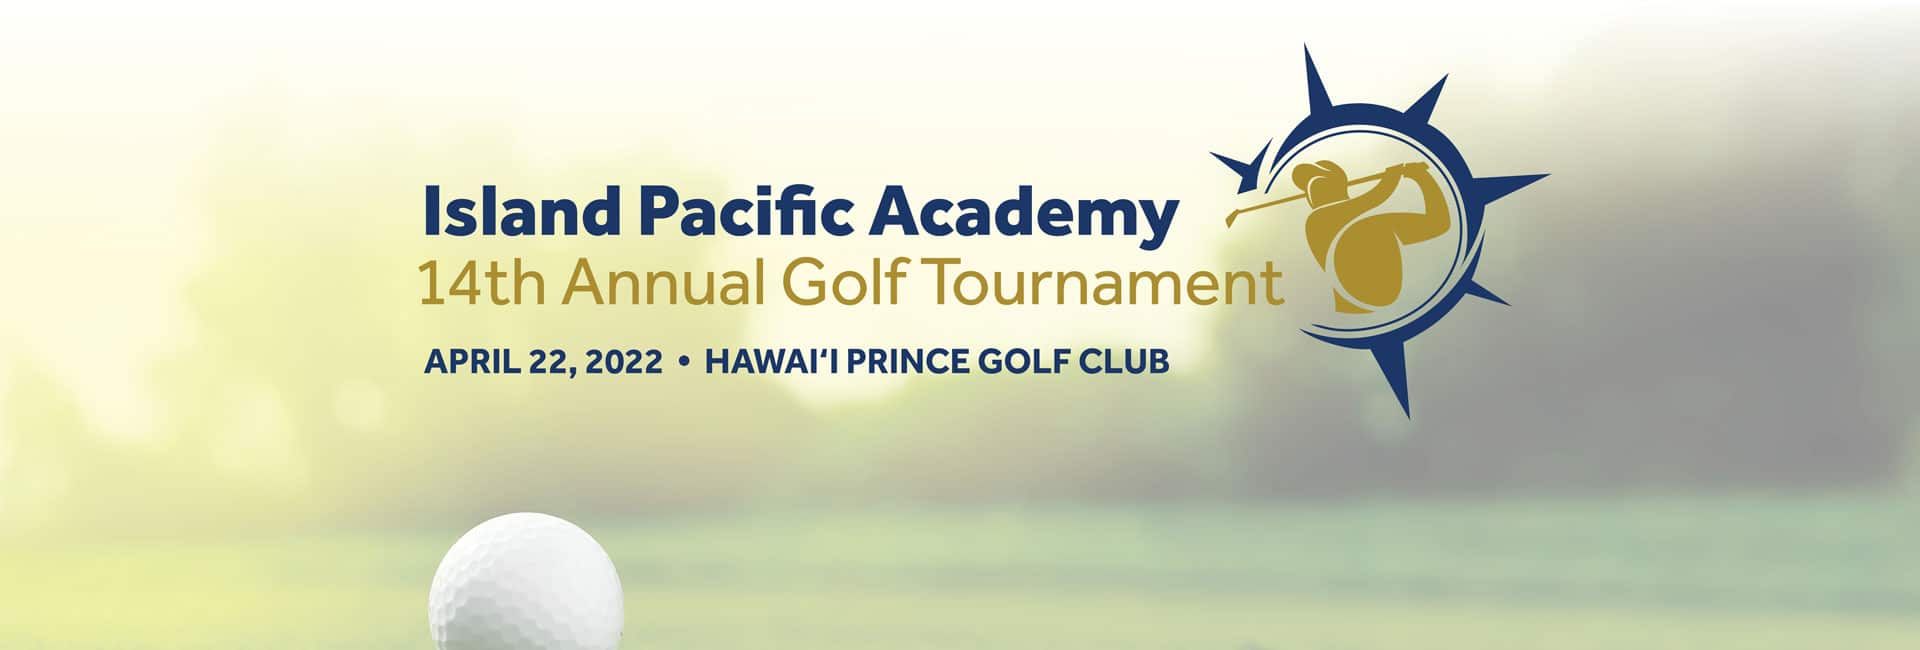 14th Annual Golf Tournament graphic